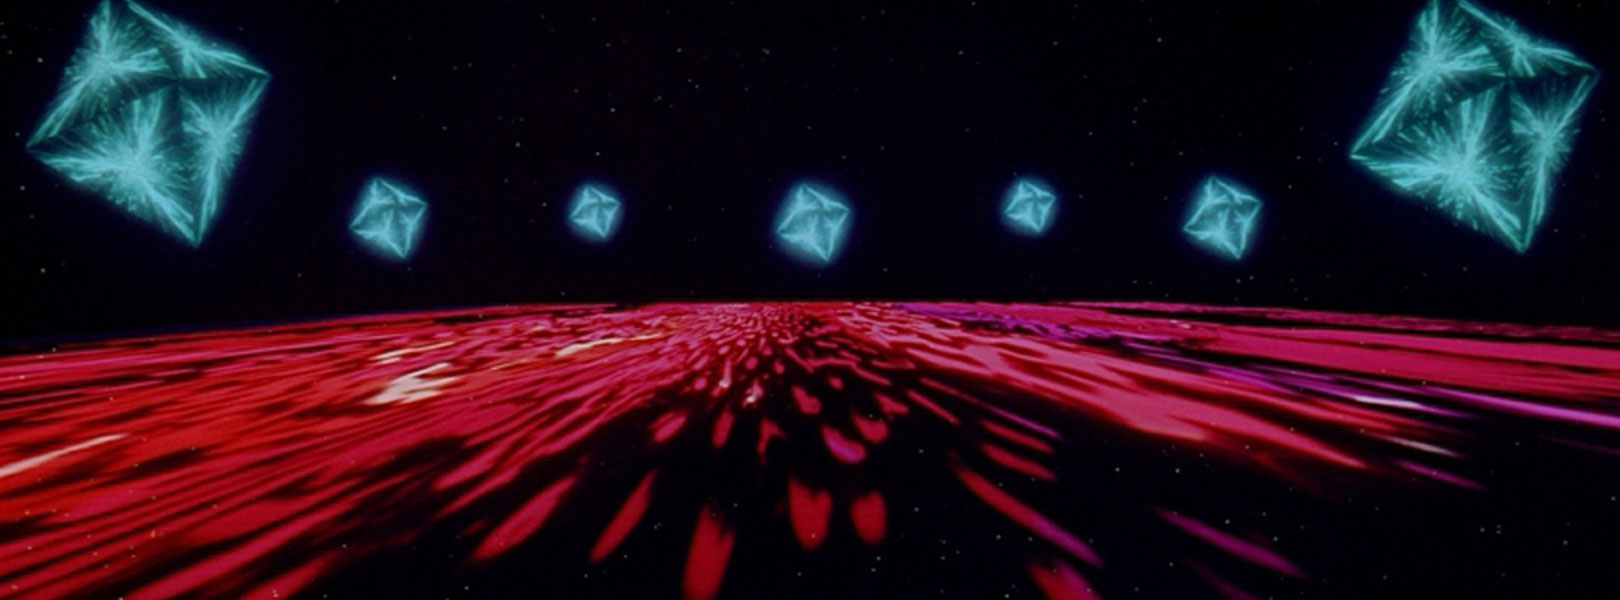 Fotograma de “2001: A Space Odyssey” (Stanley Kubrick, 1968).